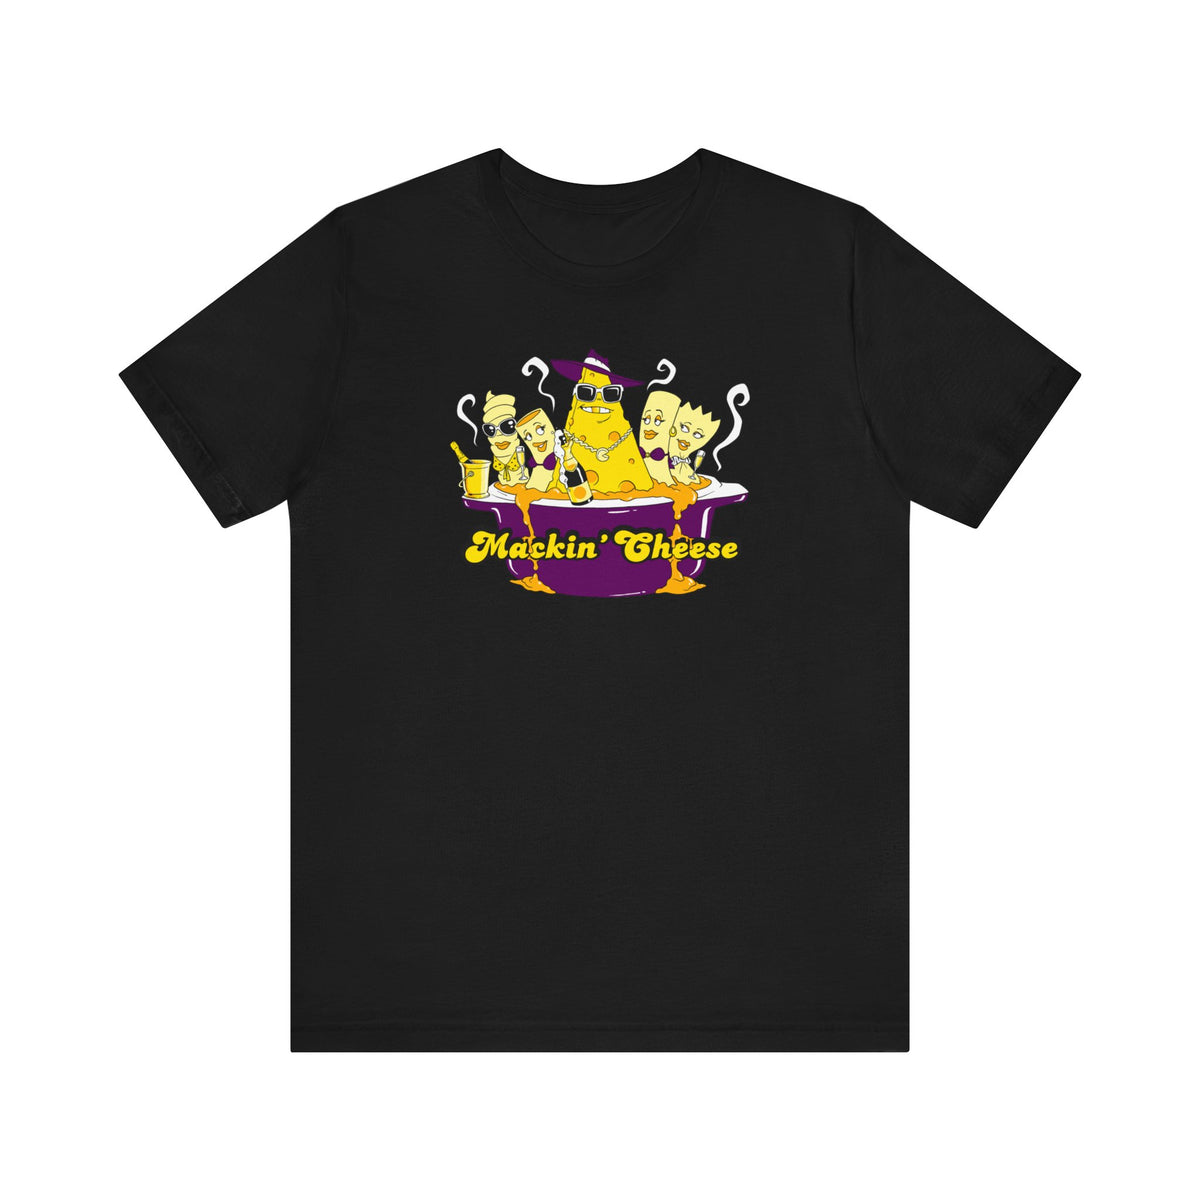 Mackin' Cheese - Men's T-Shirt